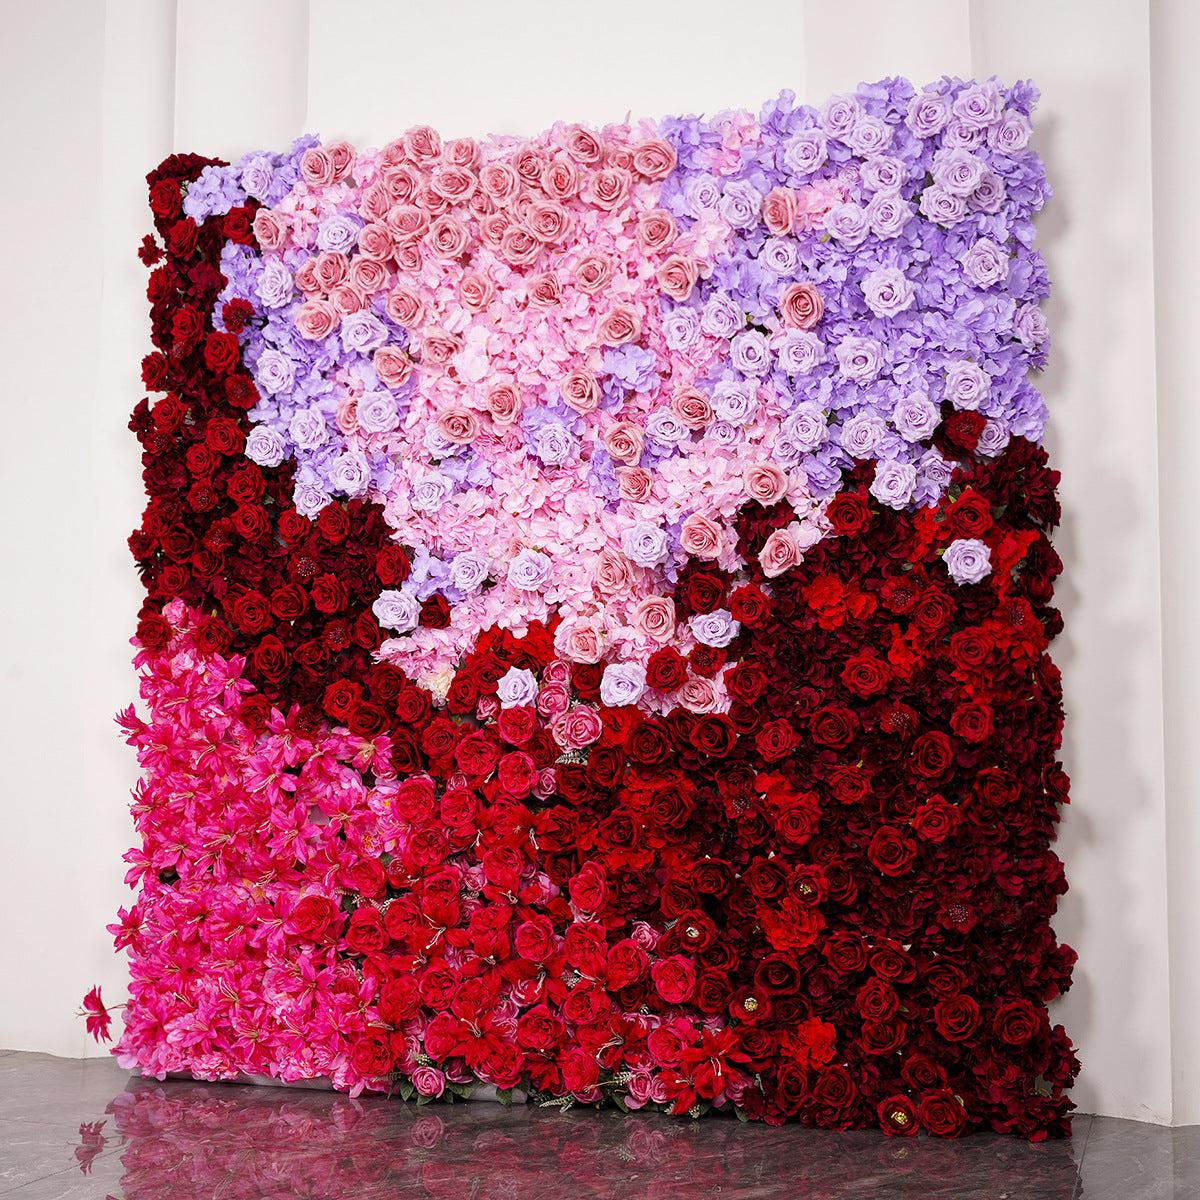 3D Artificial Flower Wall Arrangement Wedding Party Birthday Backdrop Decor HQ3925